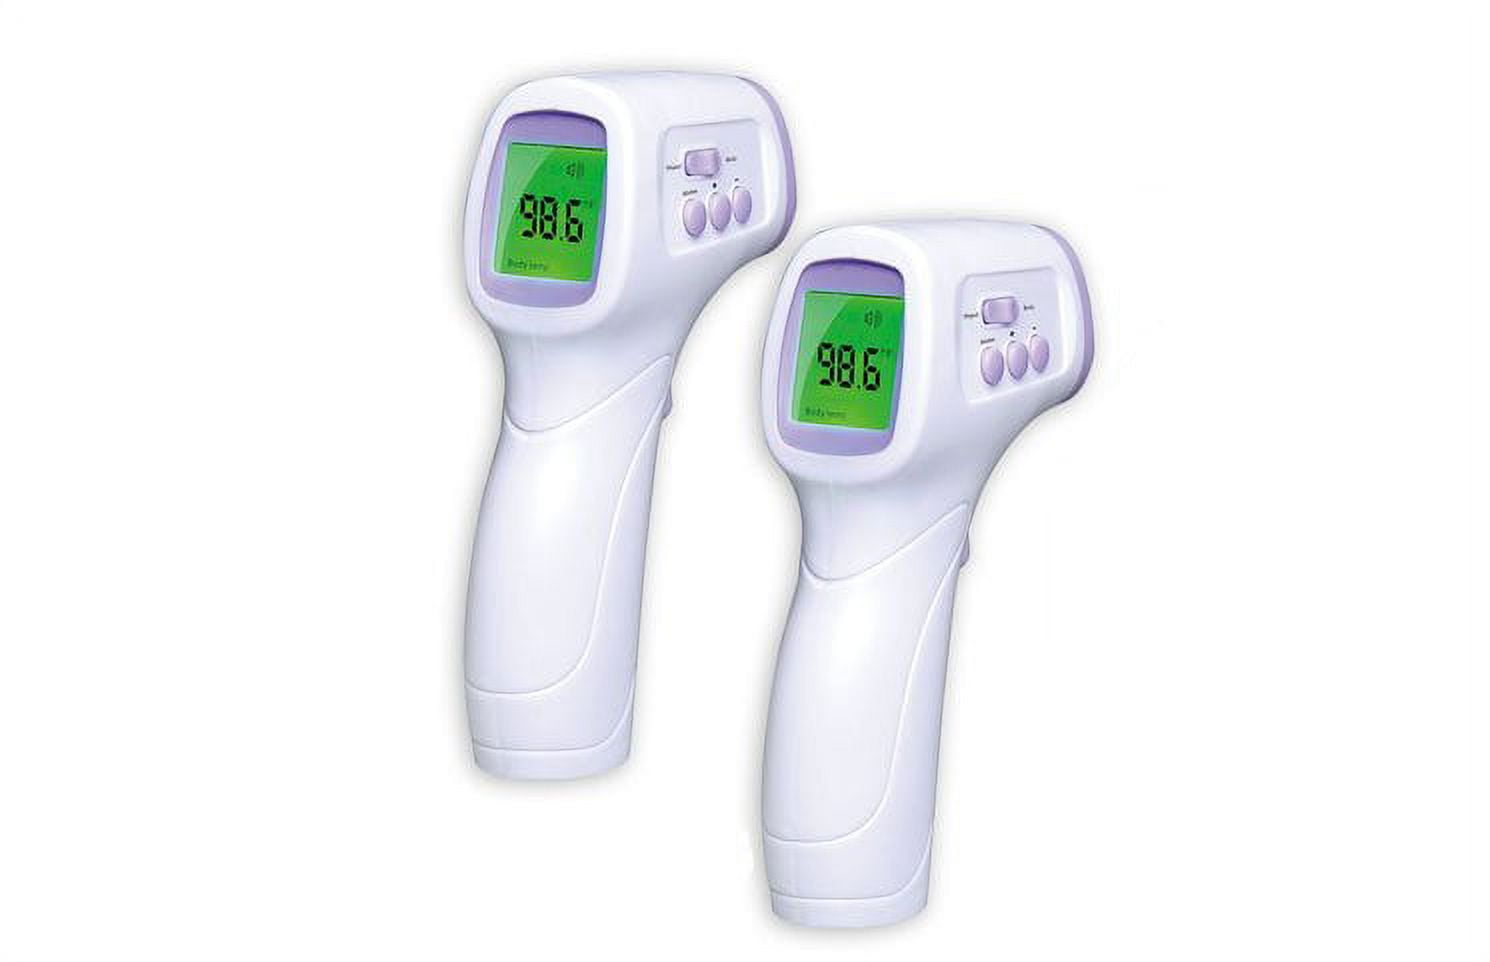 SURE-GUARD Digital Thermometer